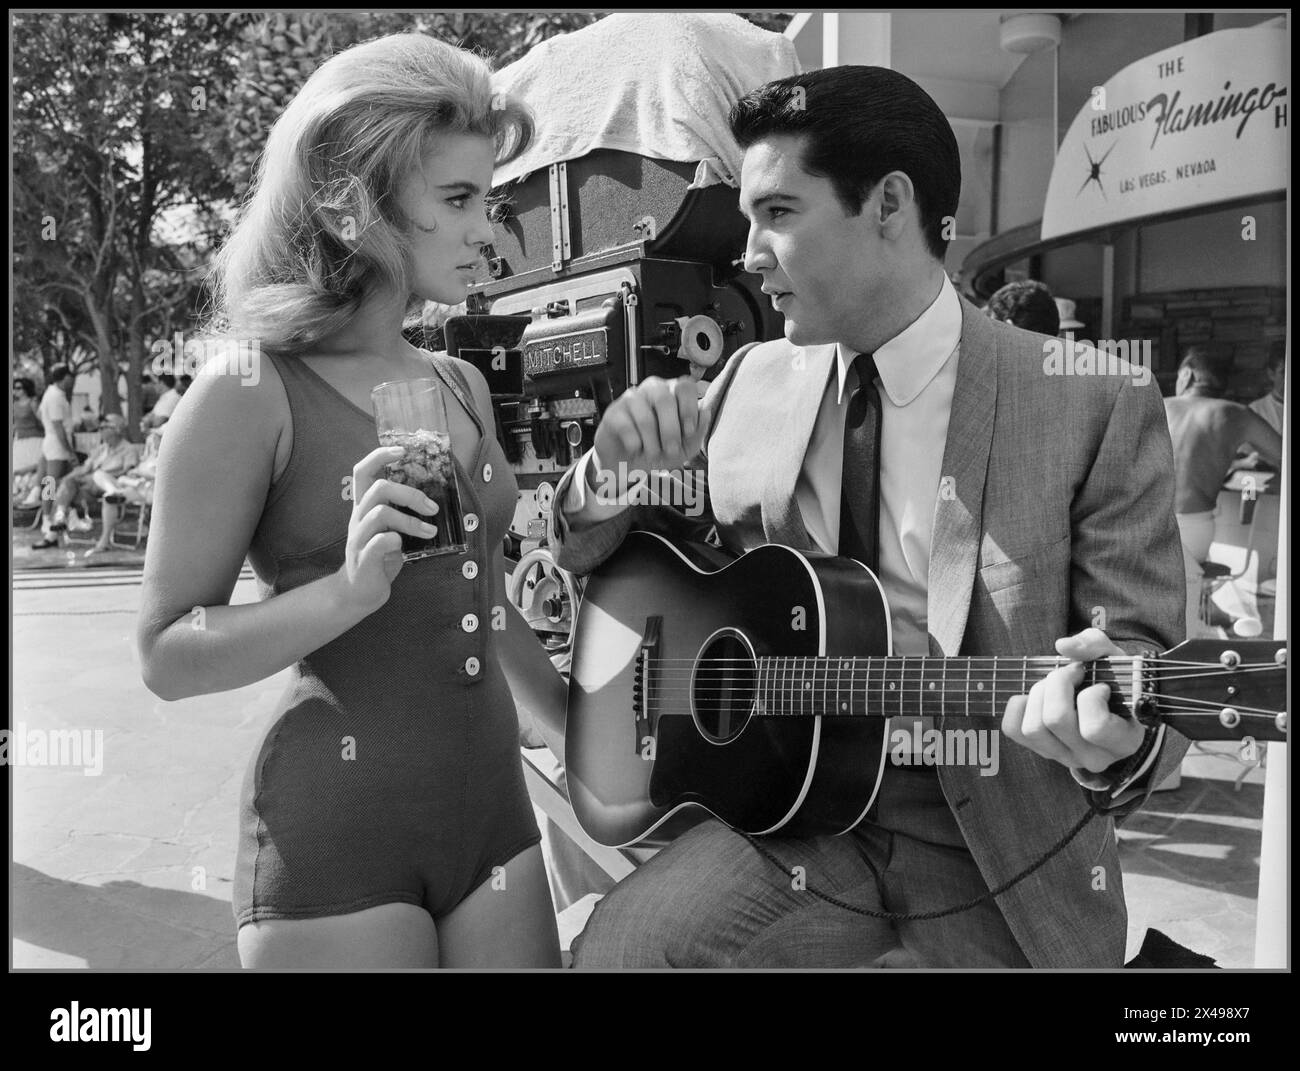 Elvis Presley and Ann Margaret on Viva Las Vegas location film set 1964 relaxing taking a break from filming at The Flamingo Hotel Las Vegas Nevada America USA. Stock Photo